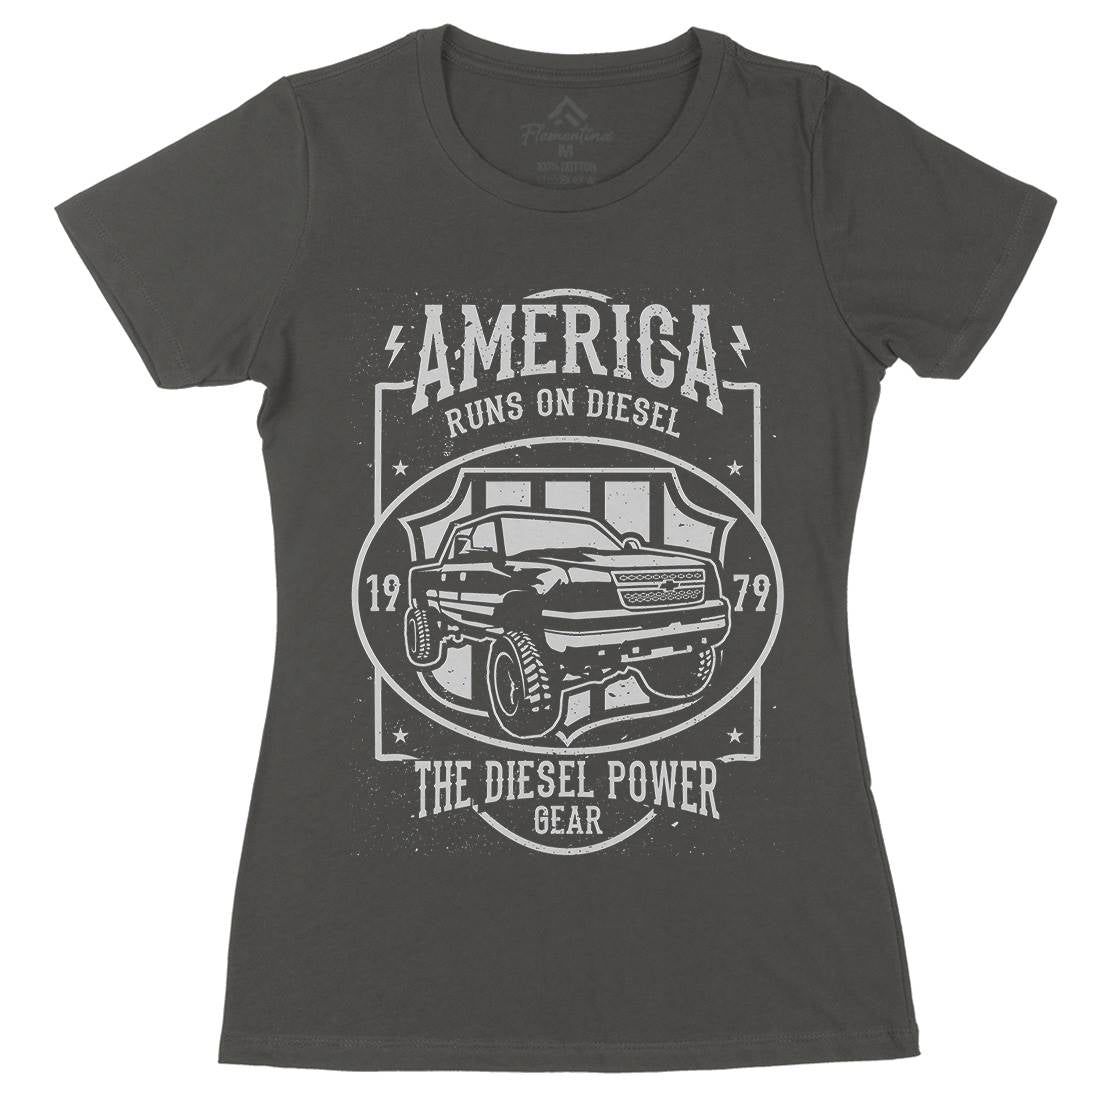 Runs On Diesel Womens Organic Crew Neck T-Shirt Cars A131